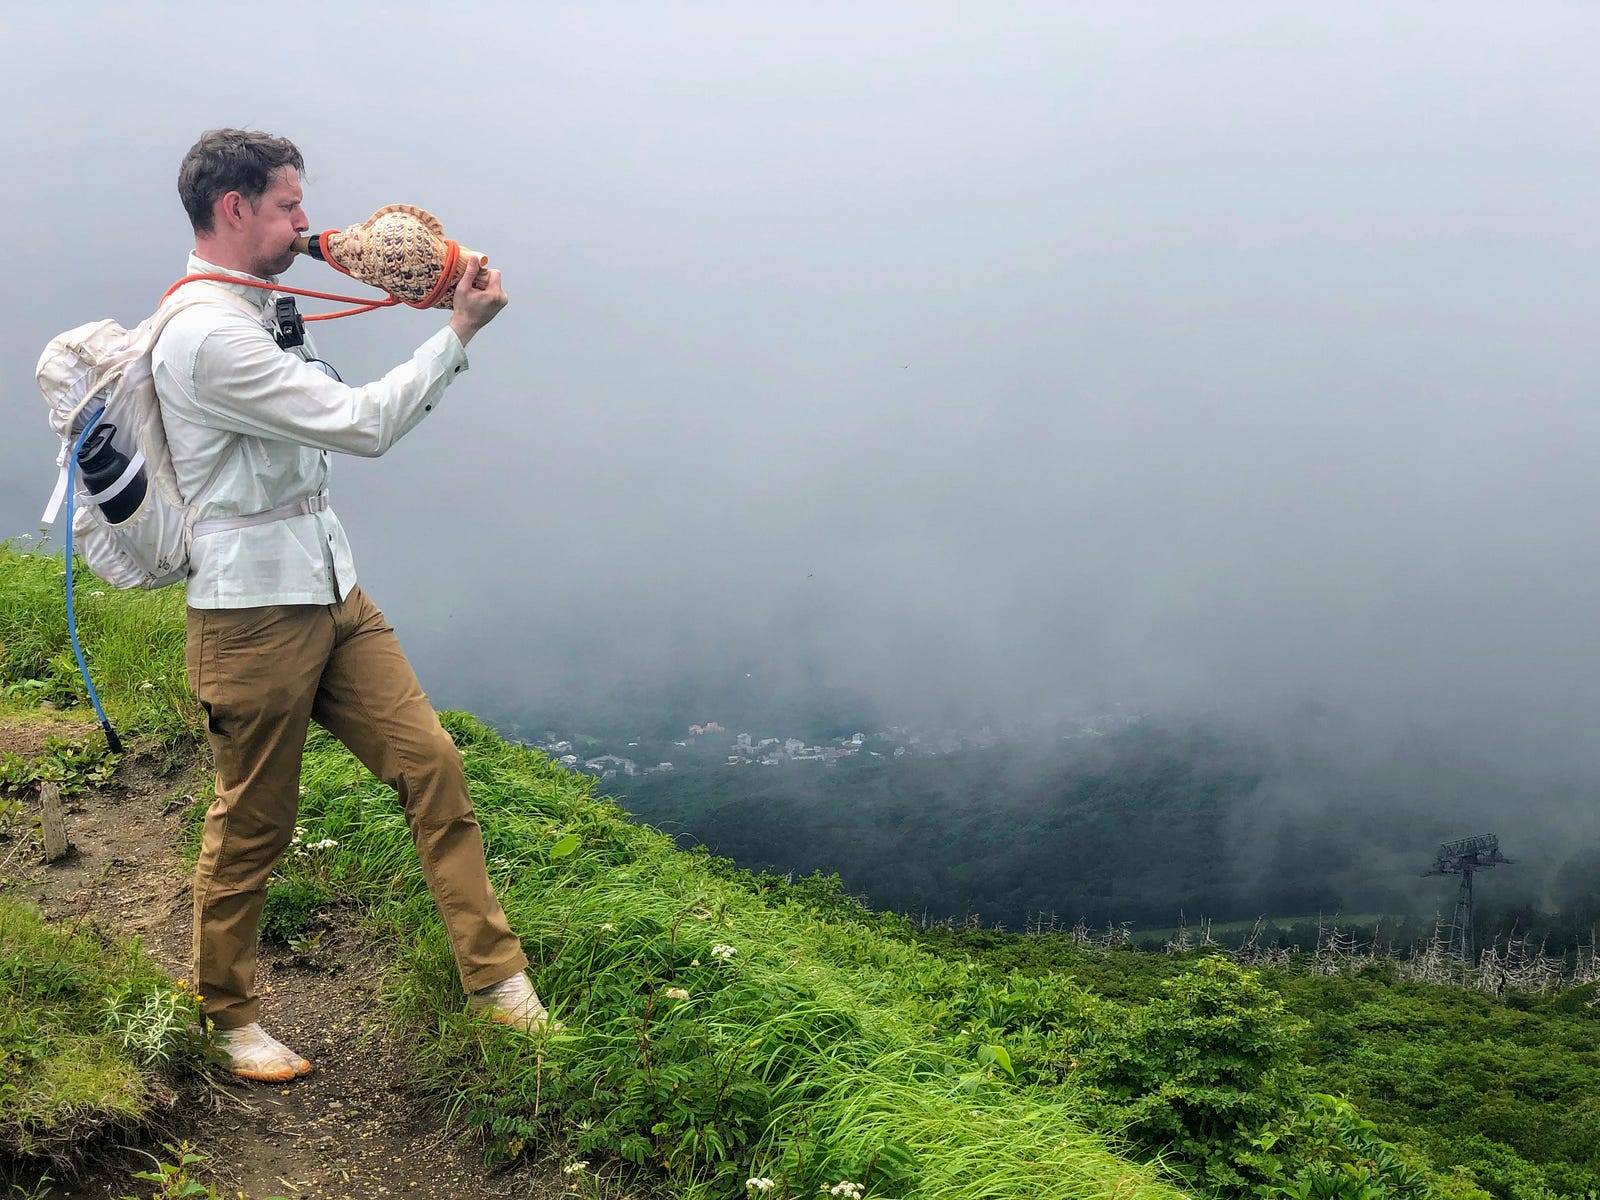 Tim Bunting AKA Kiwi Yamabushi blowing his conch at the summit of Jizo-dake, part of Zao-san, overlooking a Zao Onsen shrouded in cloud.